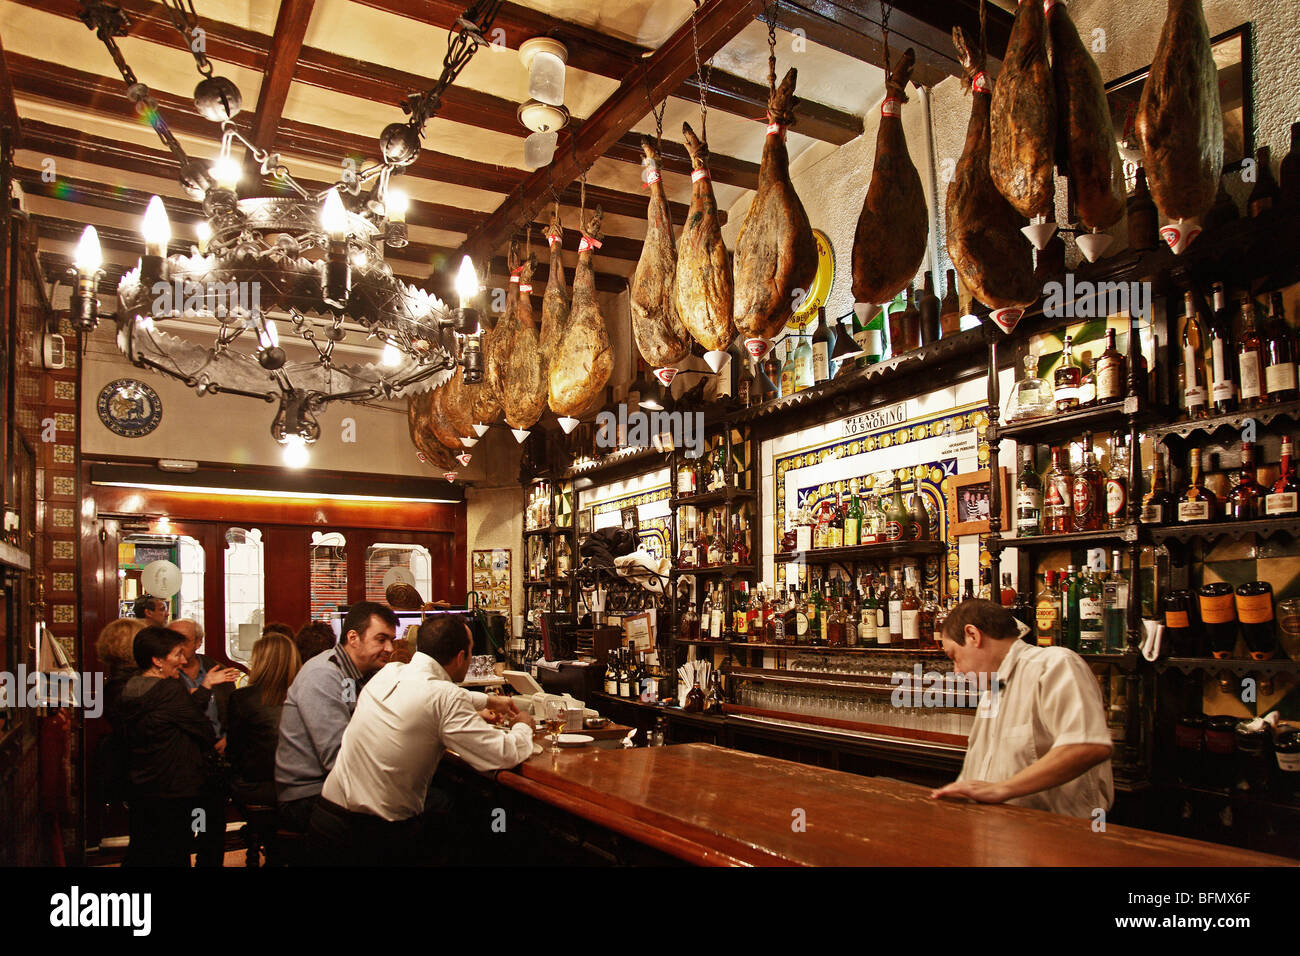 Spain, Cataluna, Barcelona, Ciutat Vella, The bar of the Los Caracoles restaurant in the Gothic Quarter of Barcelona. Stock Photo